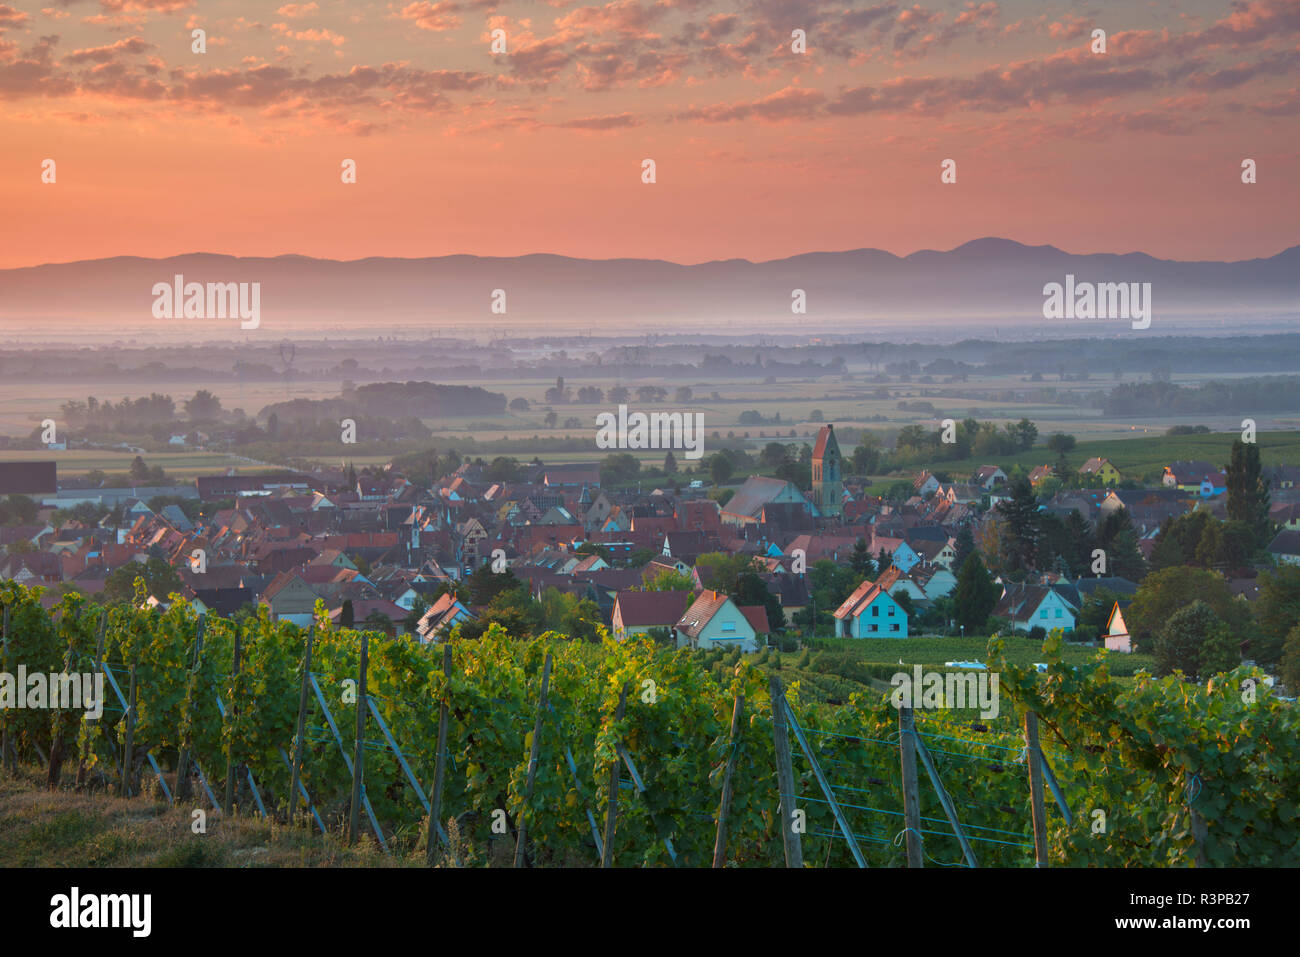 France, Alsace, Eguisheim. Sunrise light hits the picturesque traditional village of Eguisheim in the Alsatian wine region. Stock Photo